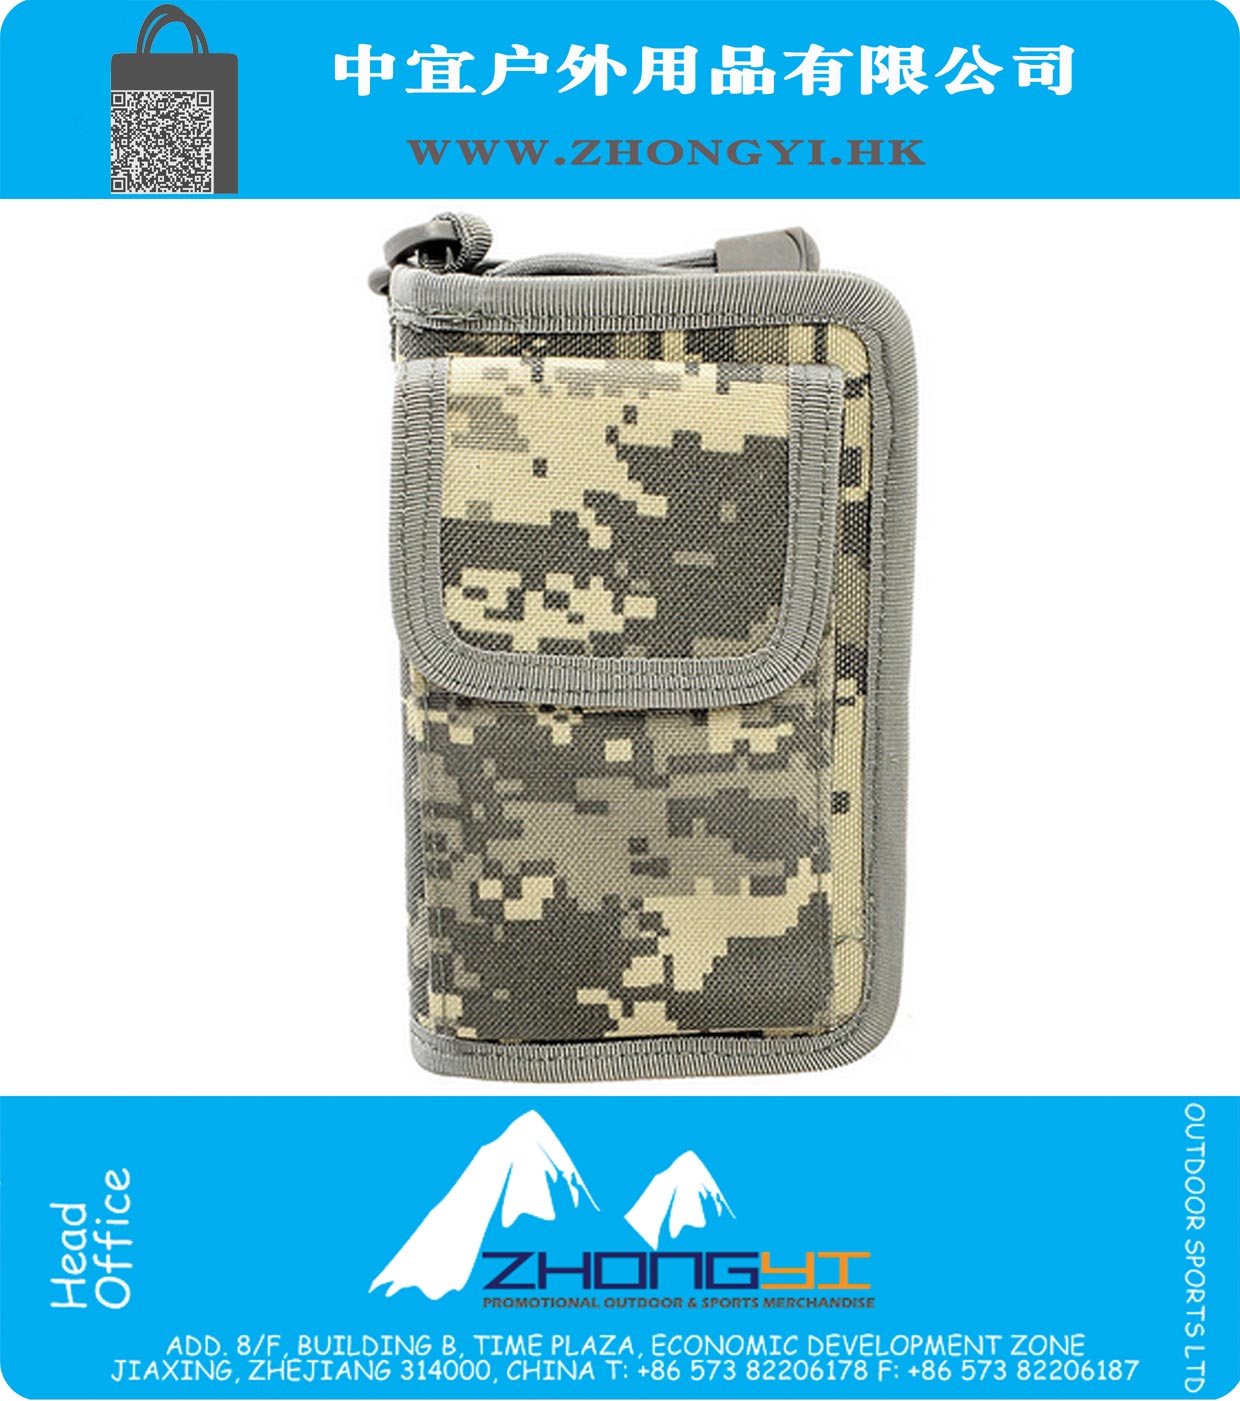 Tactical Portable EDC Tool Pocket